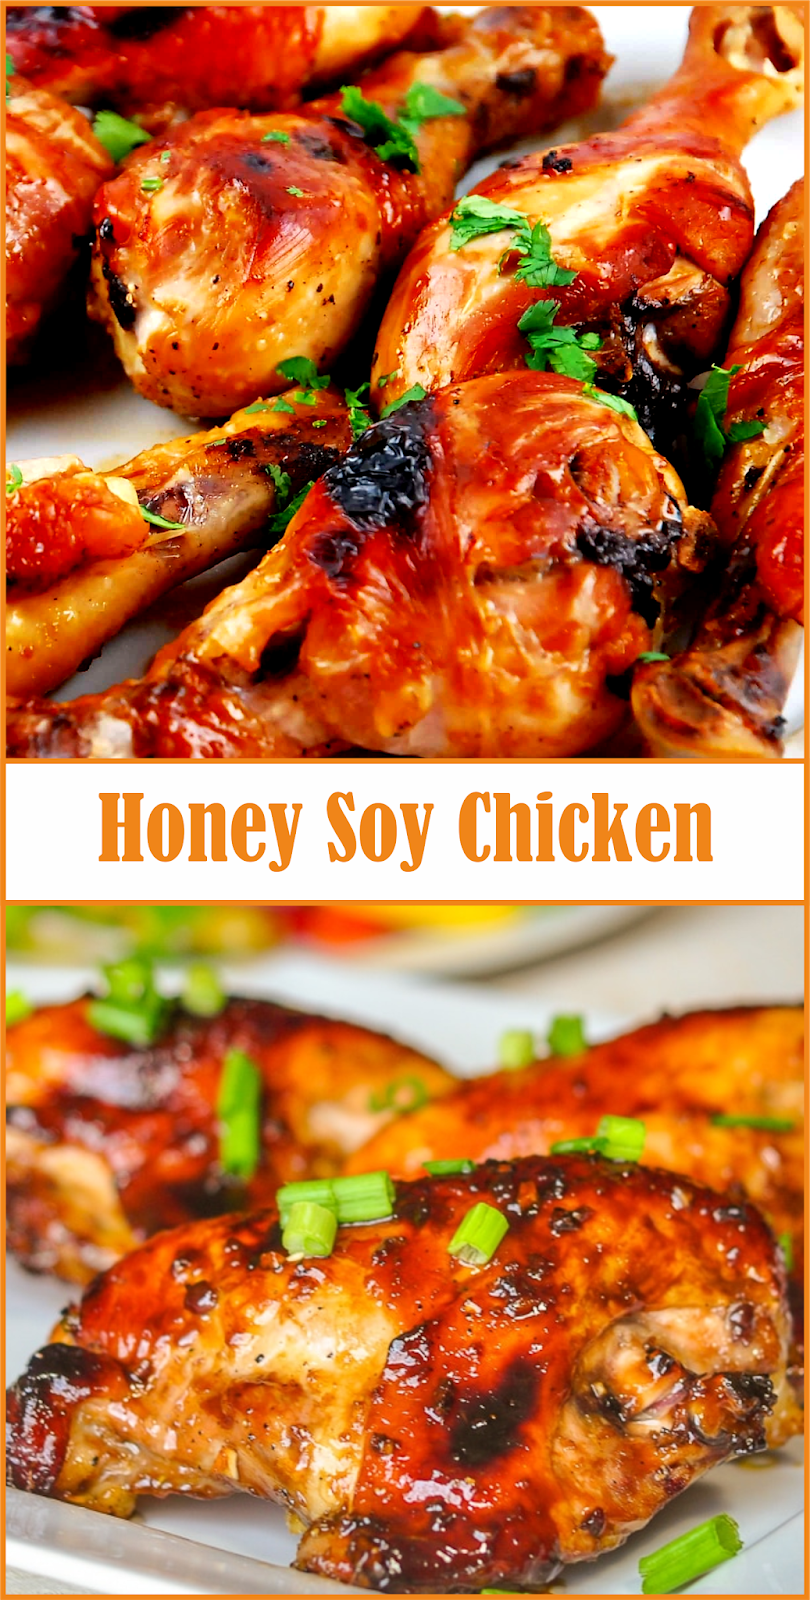 Honey Soy Chicken | Think food